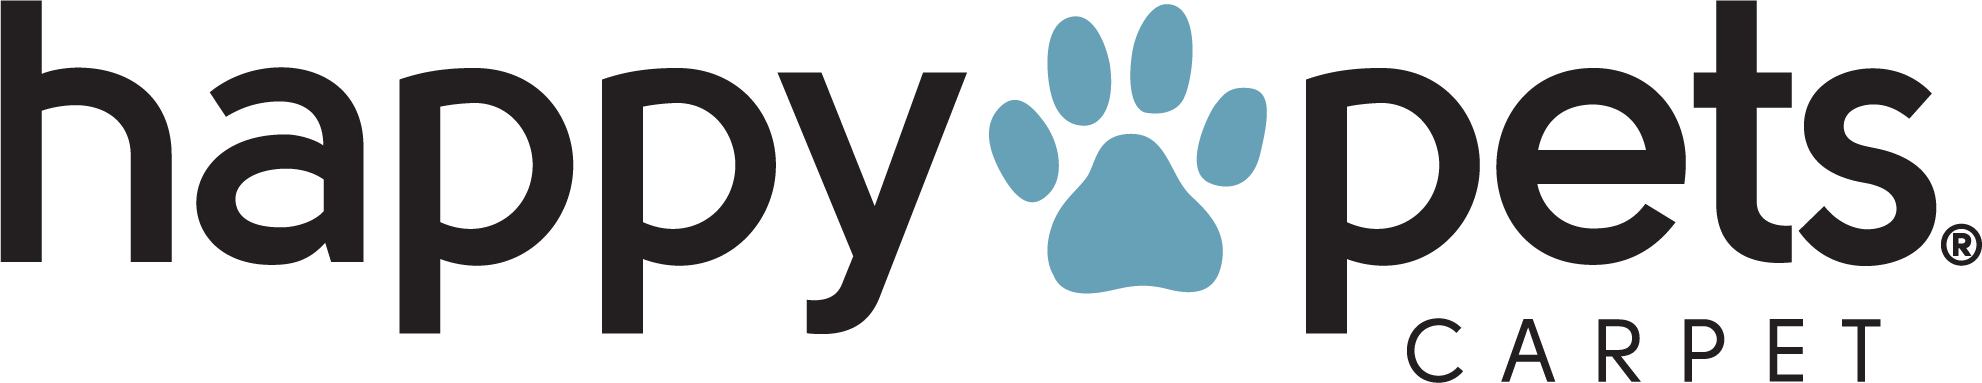 Pet Performance Happy Pets Logo | Carpetland USA of Virginia